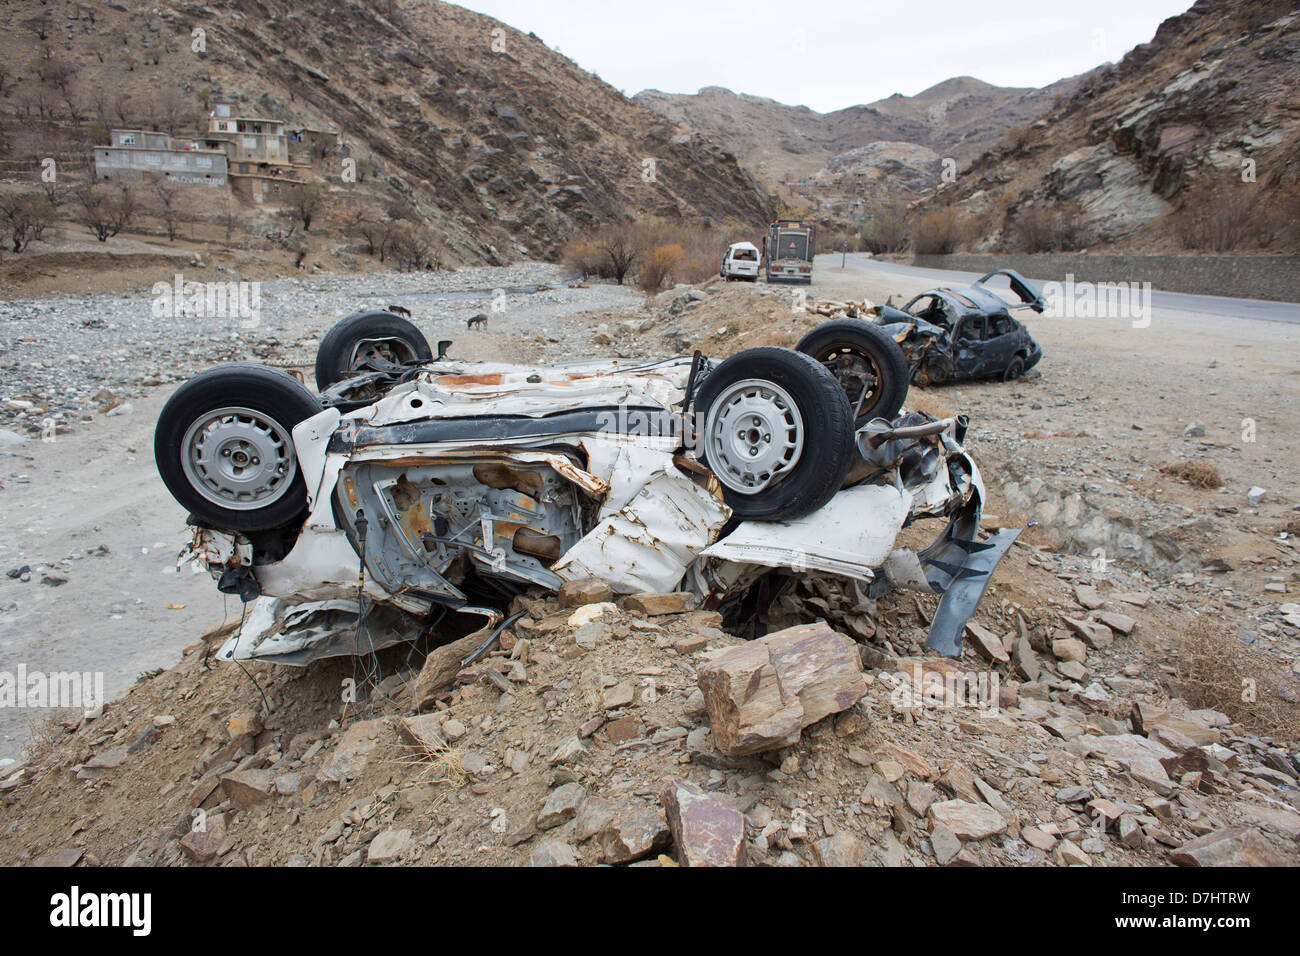 car accident between Kunduz and kabul, Afghanistan Stock Photo